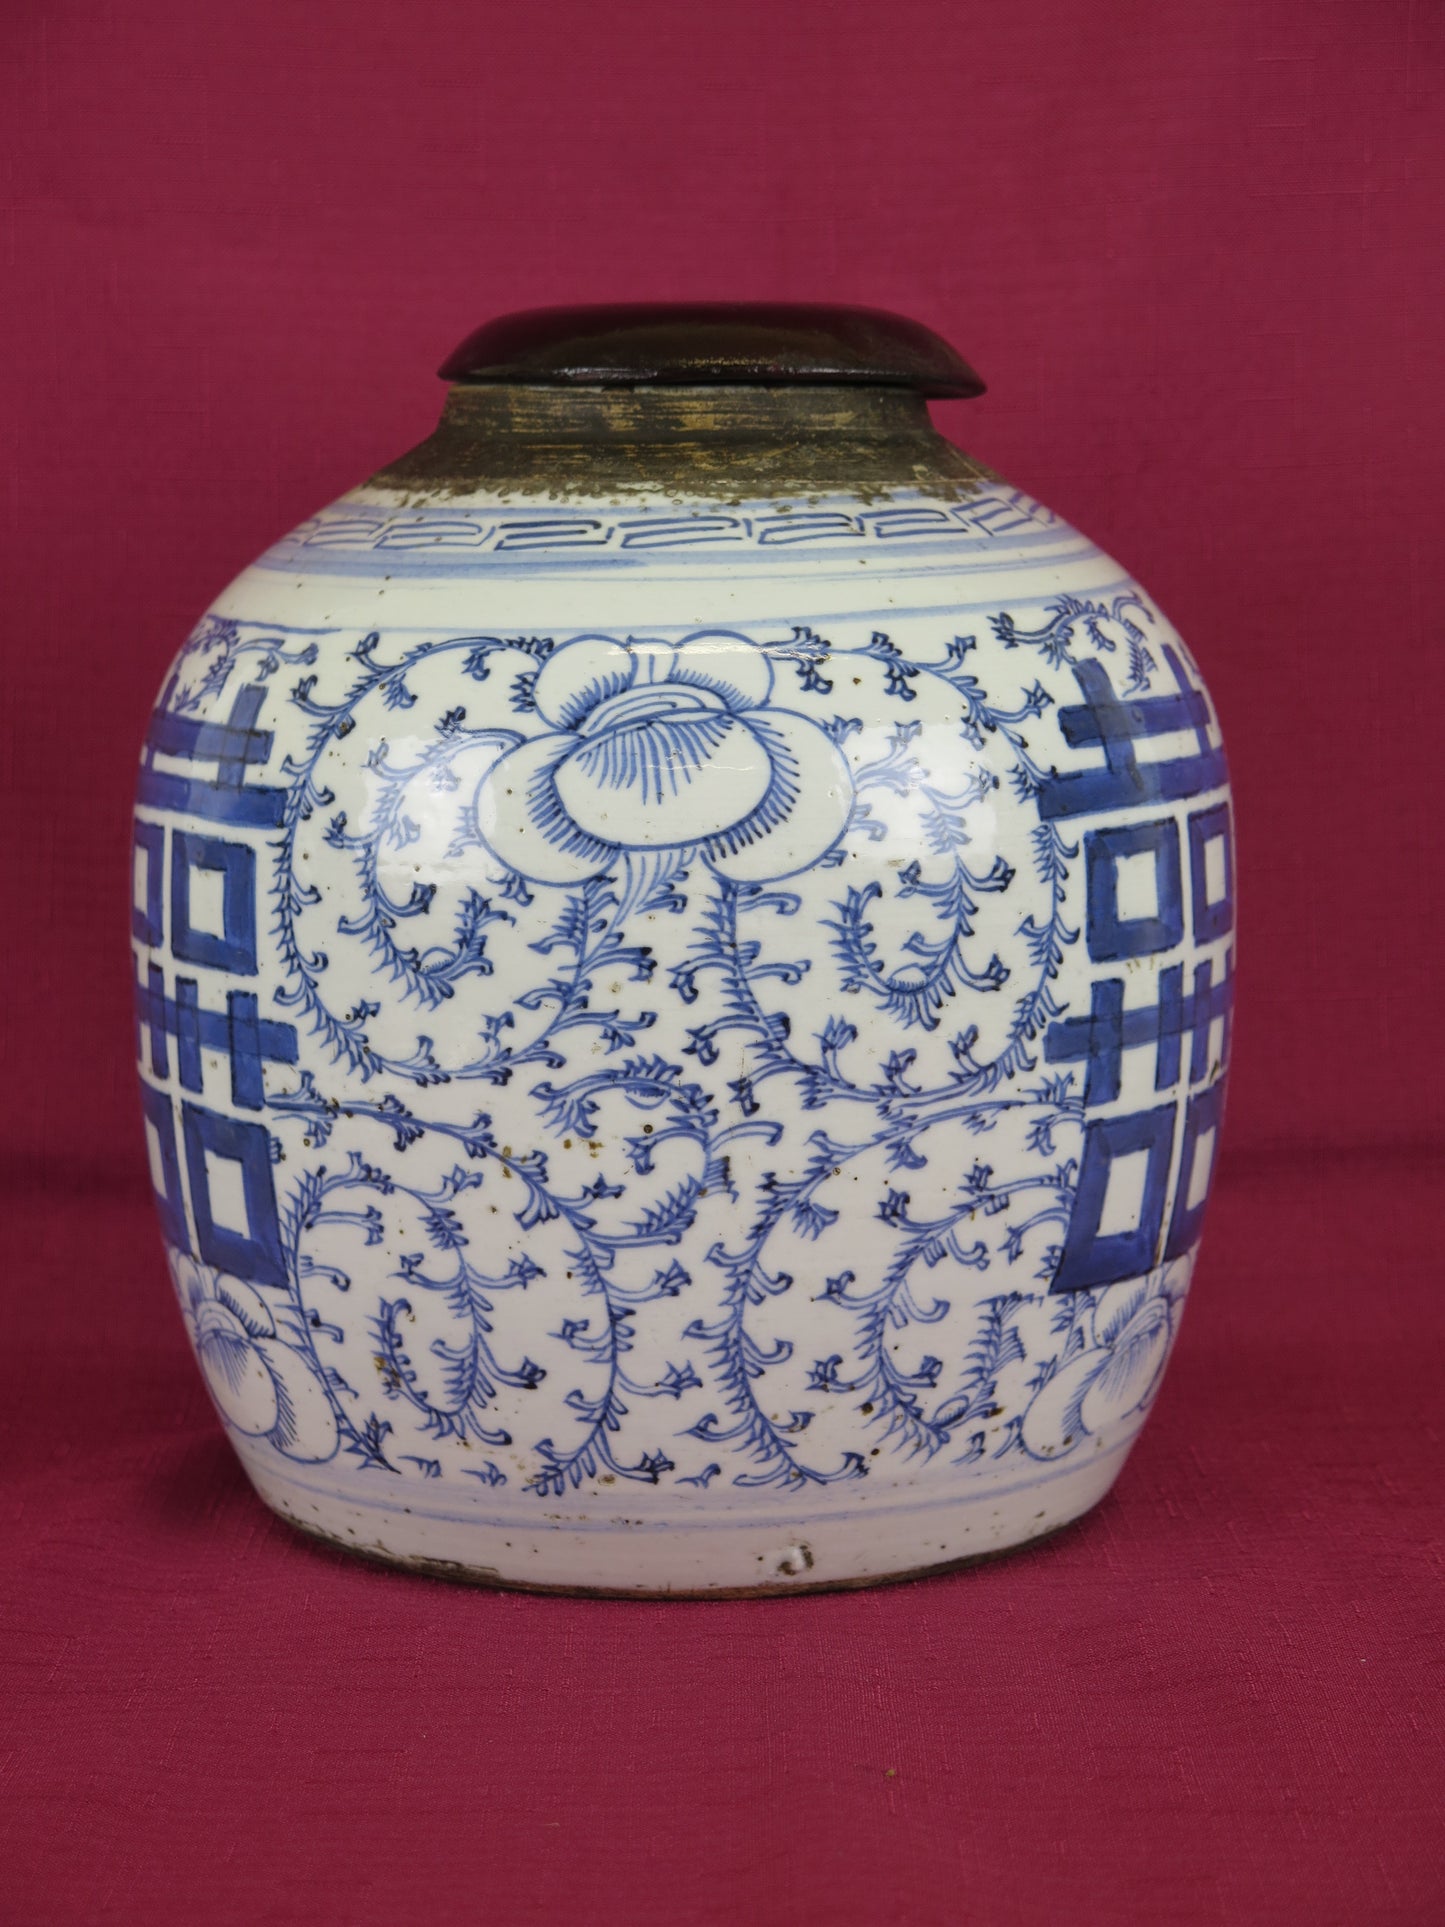 Antique blue white ceramic china vase symbol of happiness for newlyweds and wedding CM2